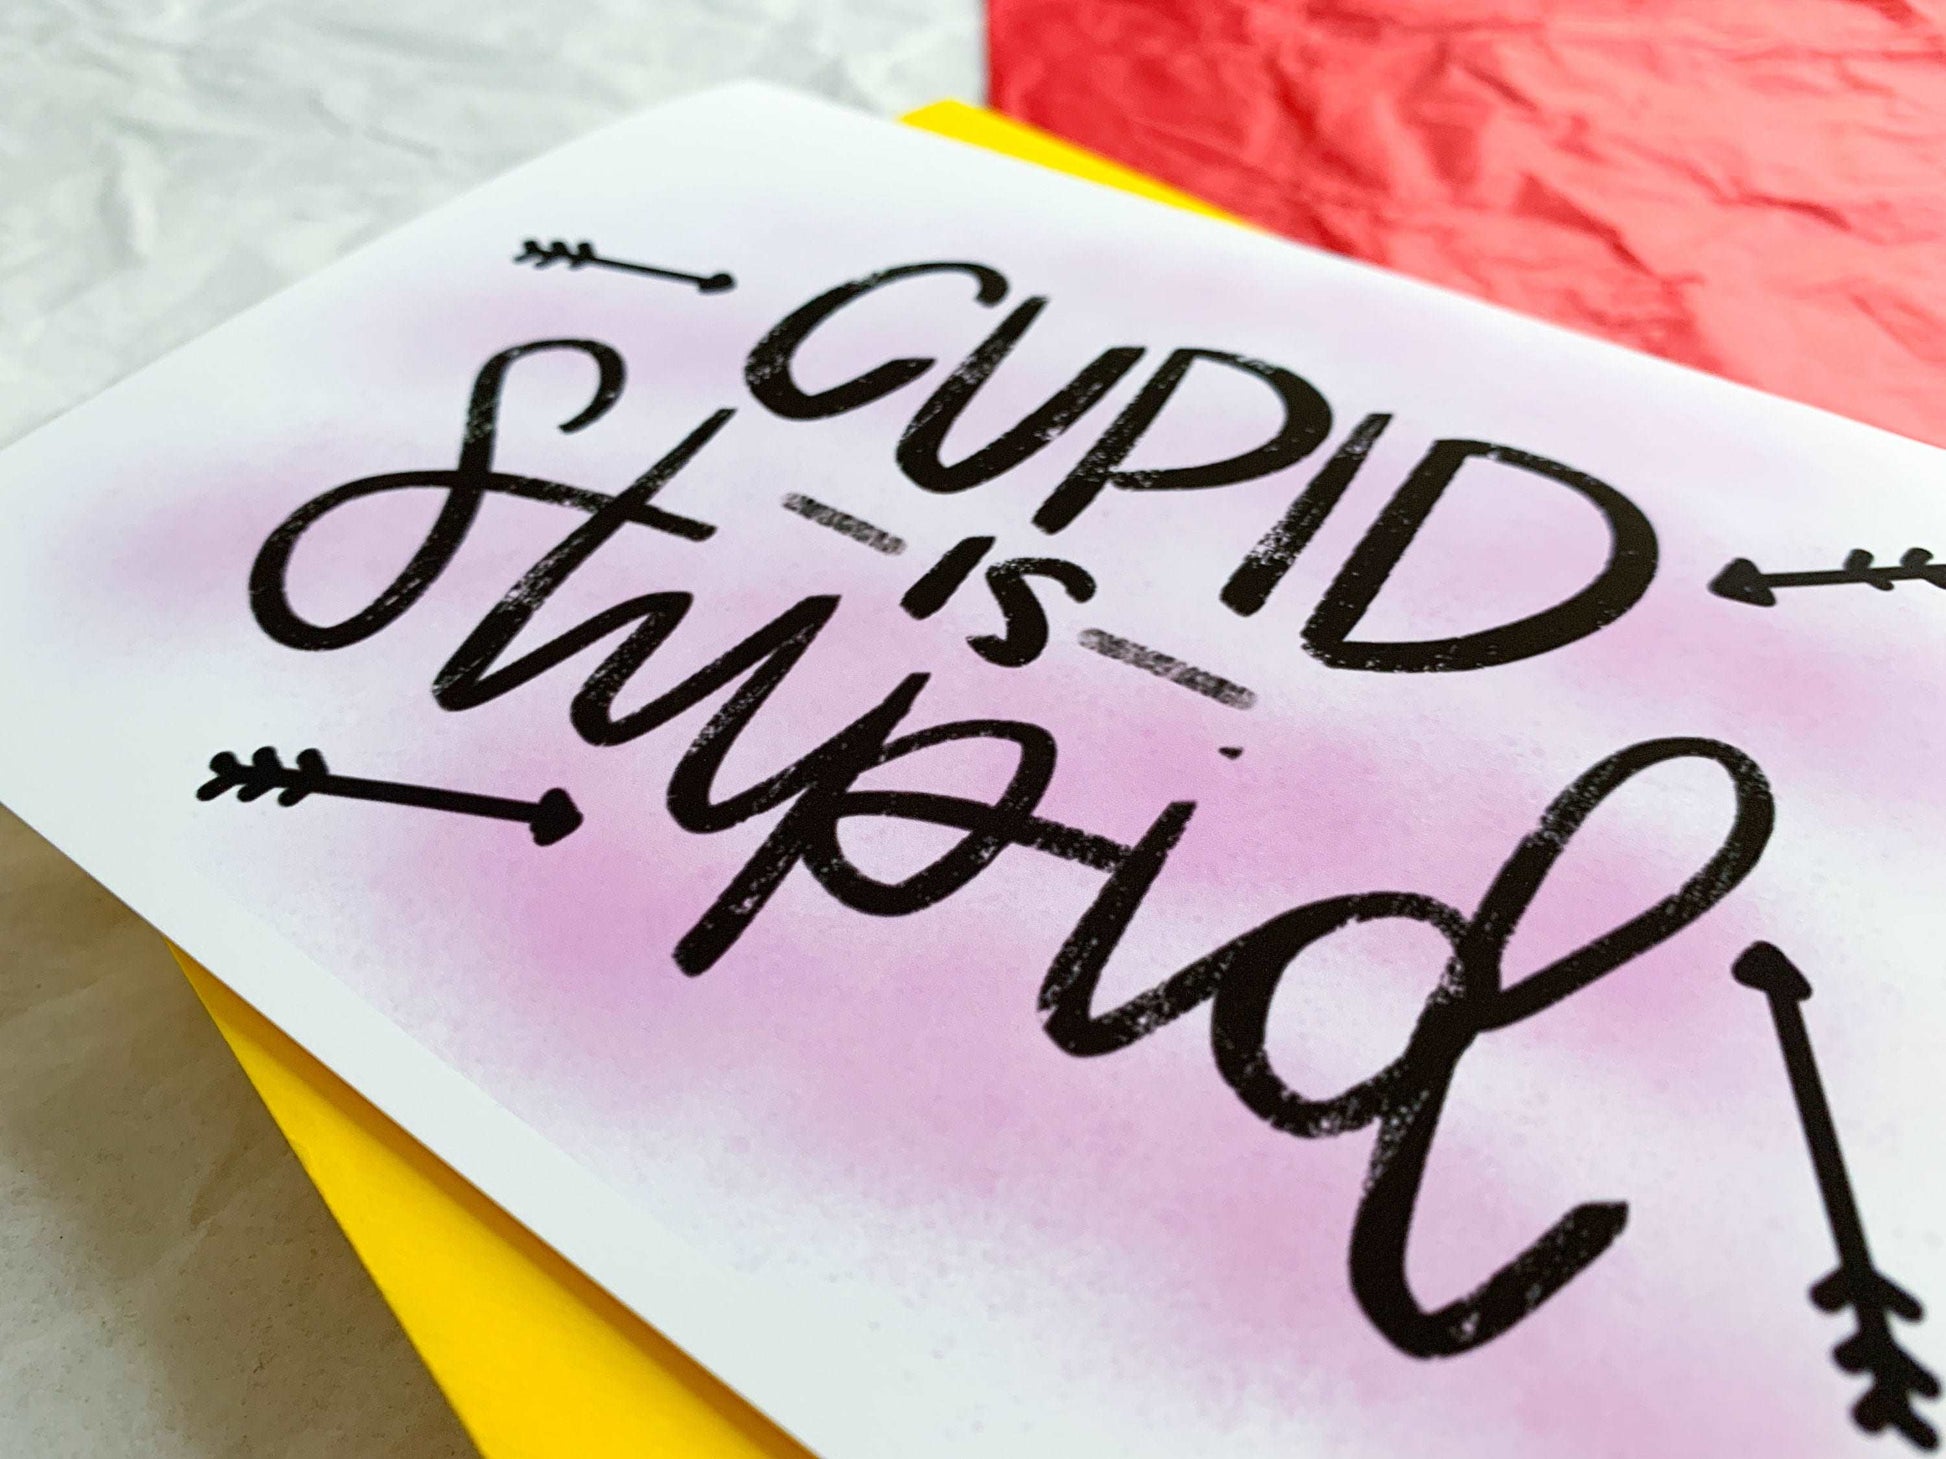 Cupid is Stupid Snarky Handmade AntiValentine Card by StoneDonut Design